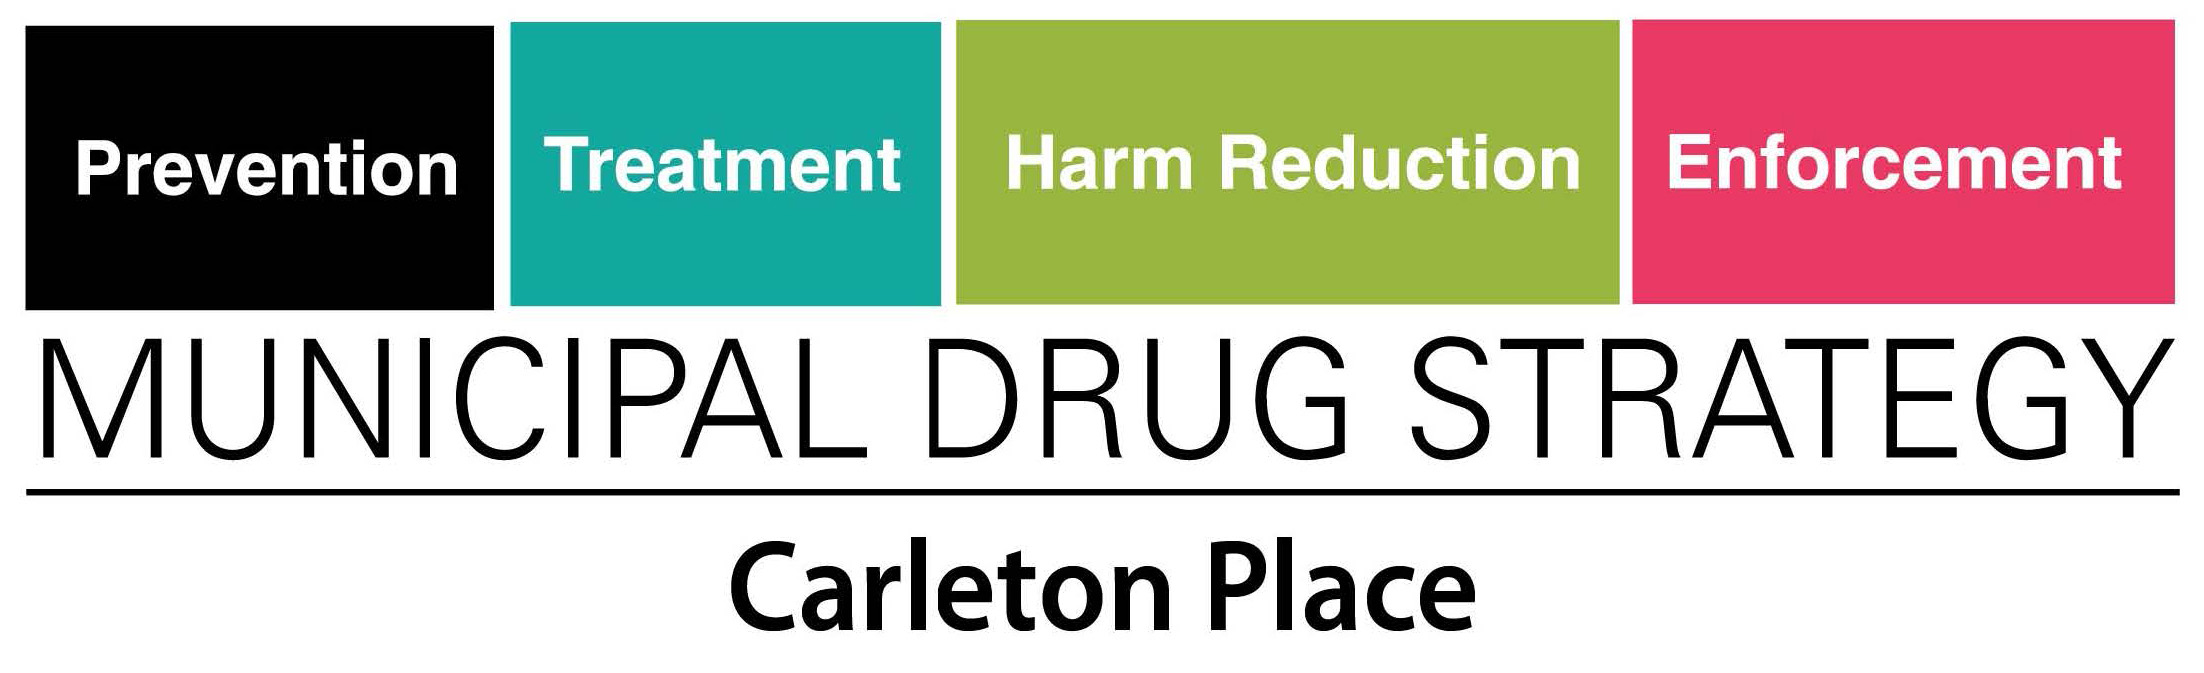 Municipal Drug Strategy Committee Logo